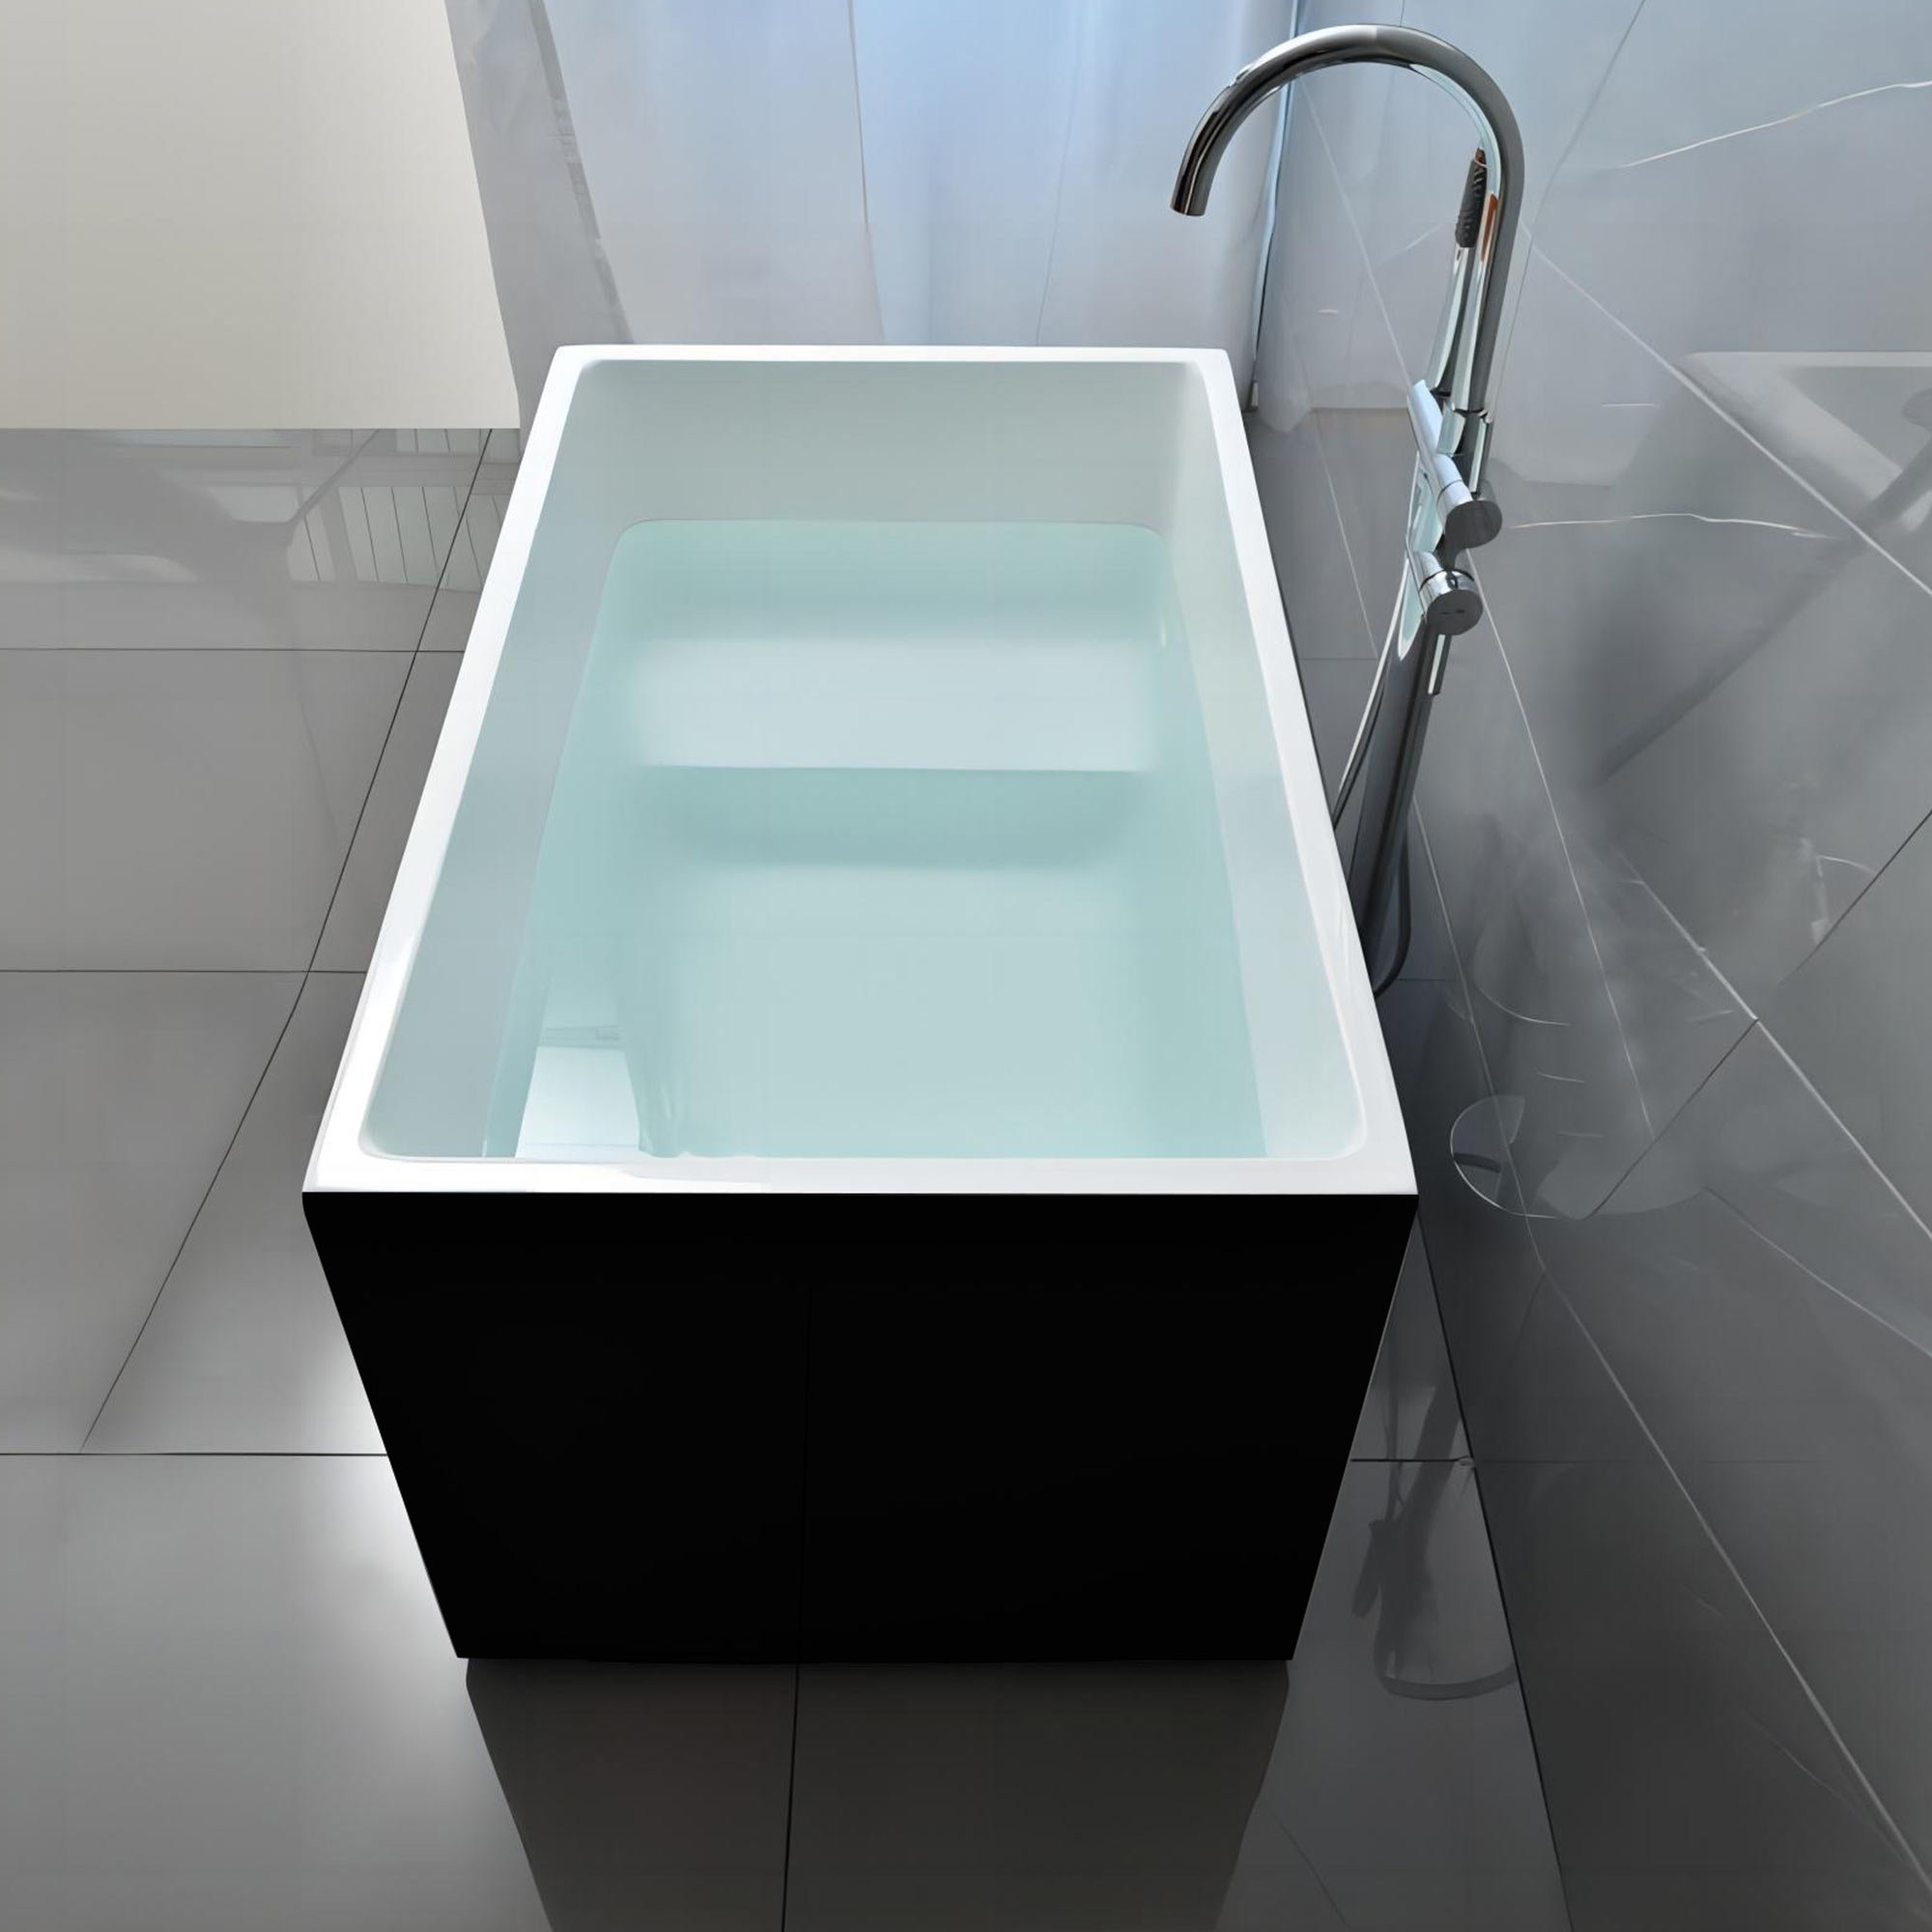 Short Bath Mat for Refinished Tub